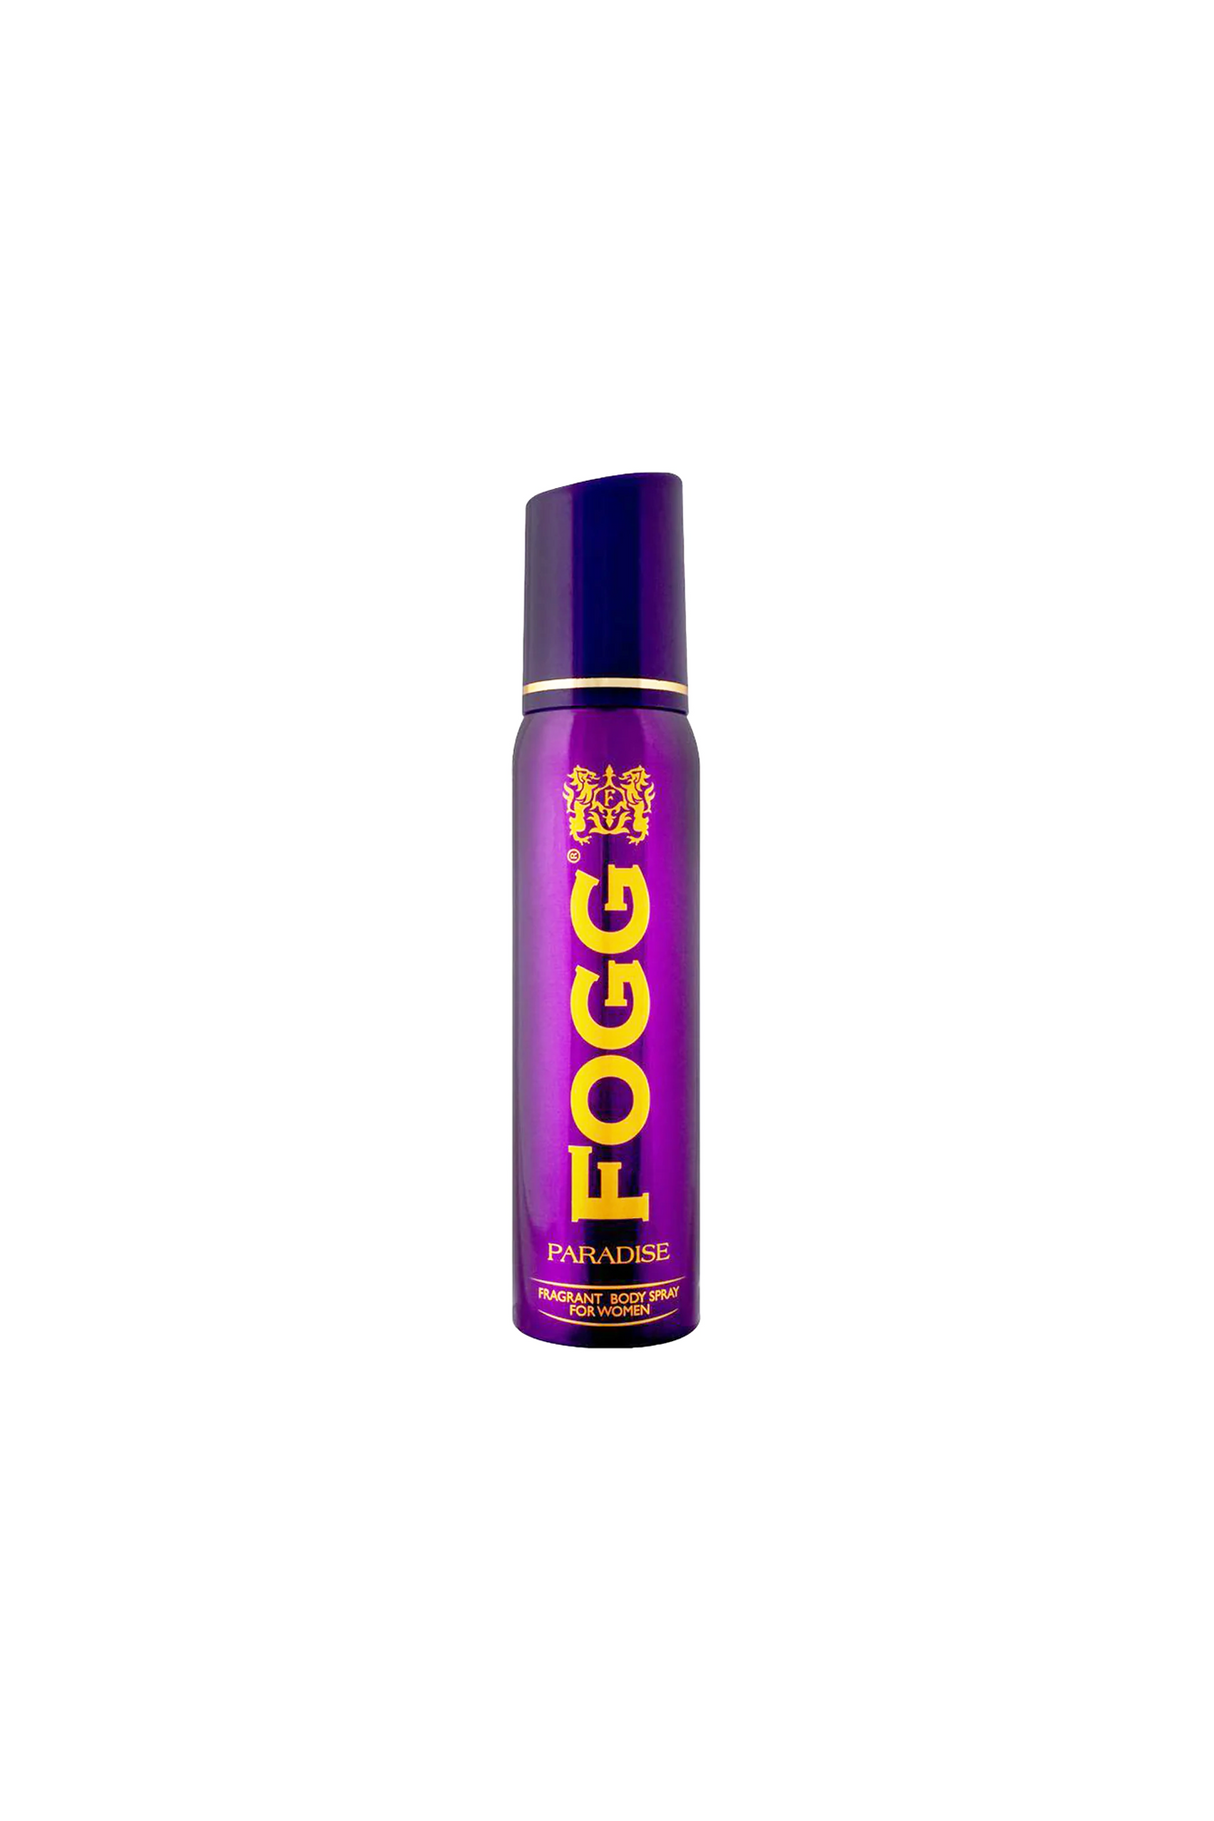 fogg paradise deodorant body spray 120ml for women